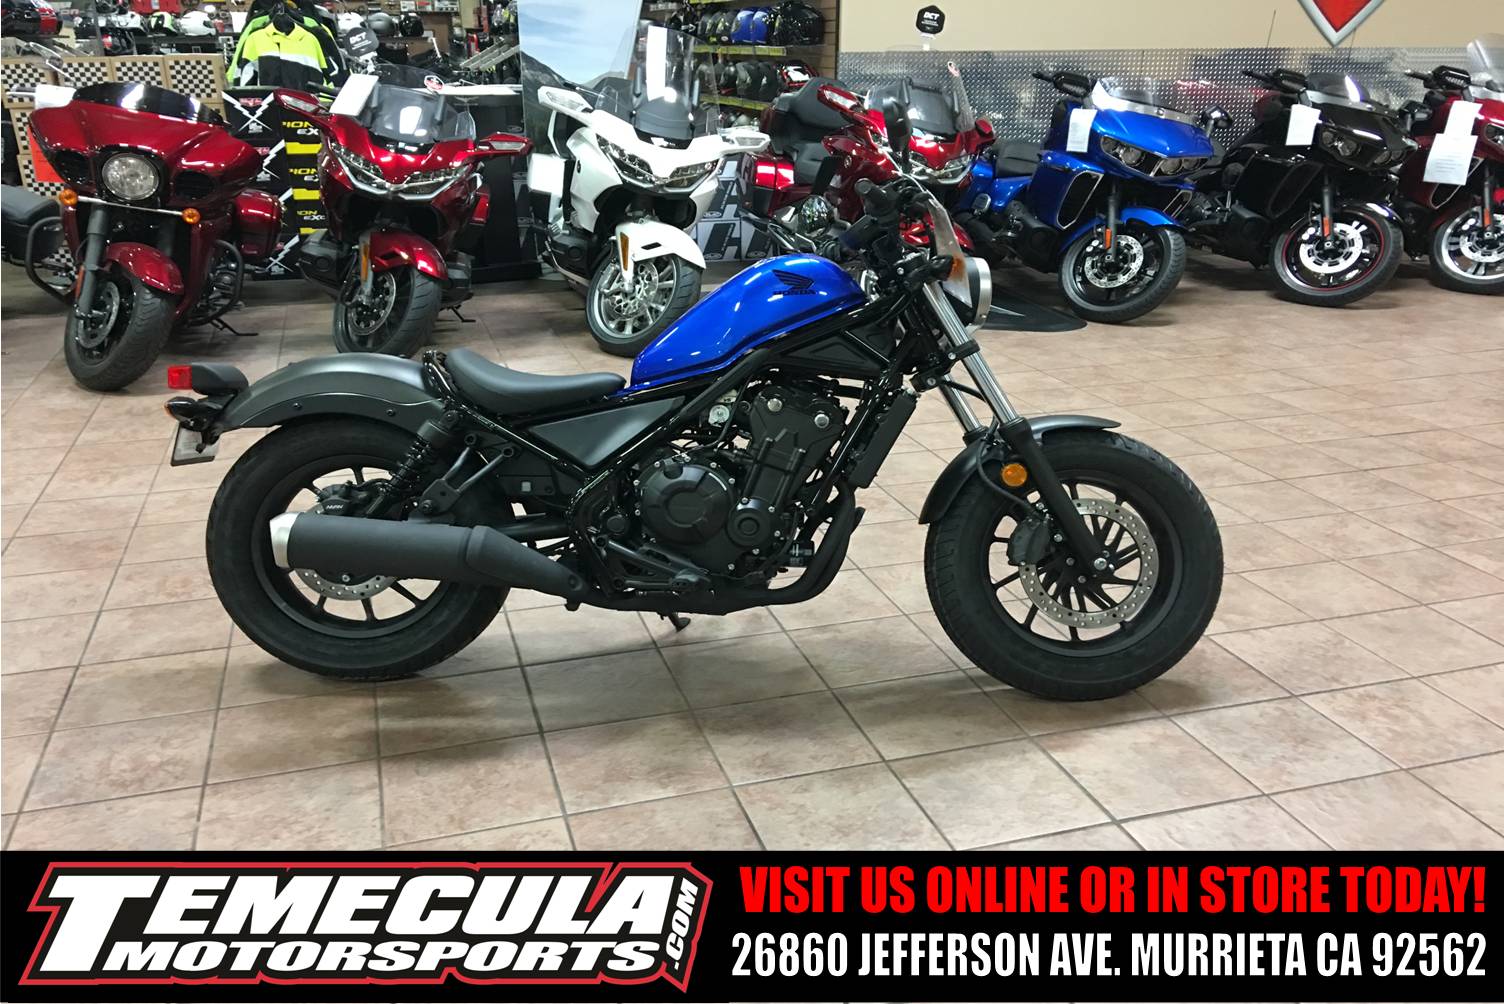 New 2018 Honda Rebel 500 Motorcycles in Murrieta, CA | Stock Number ...